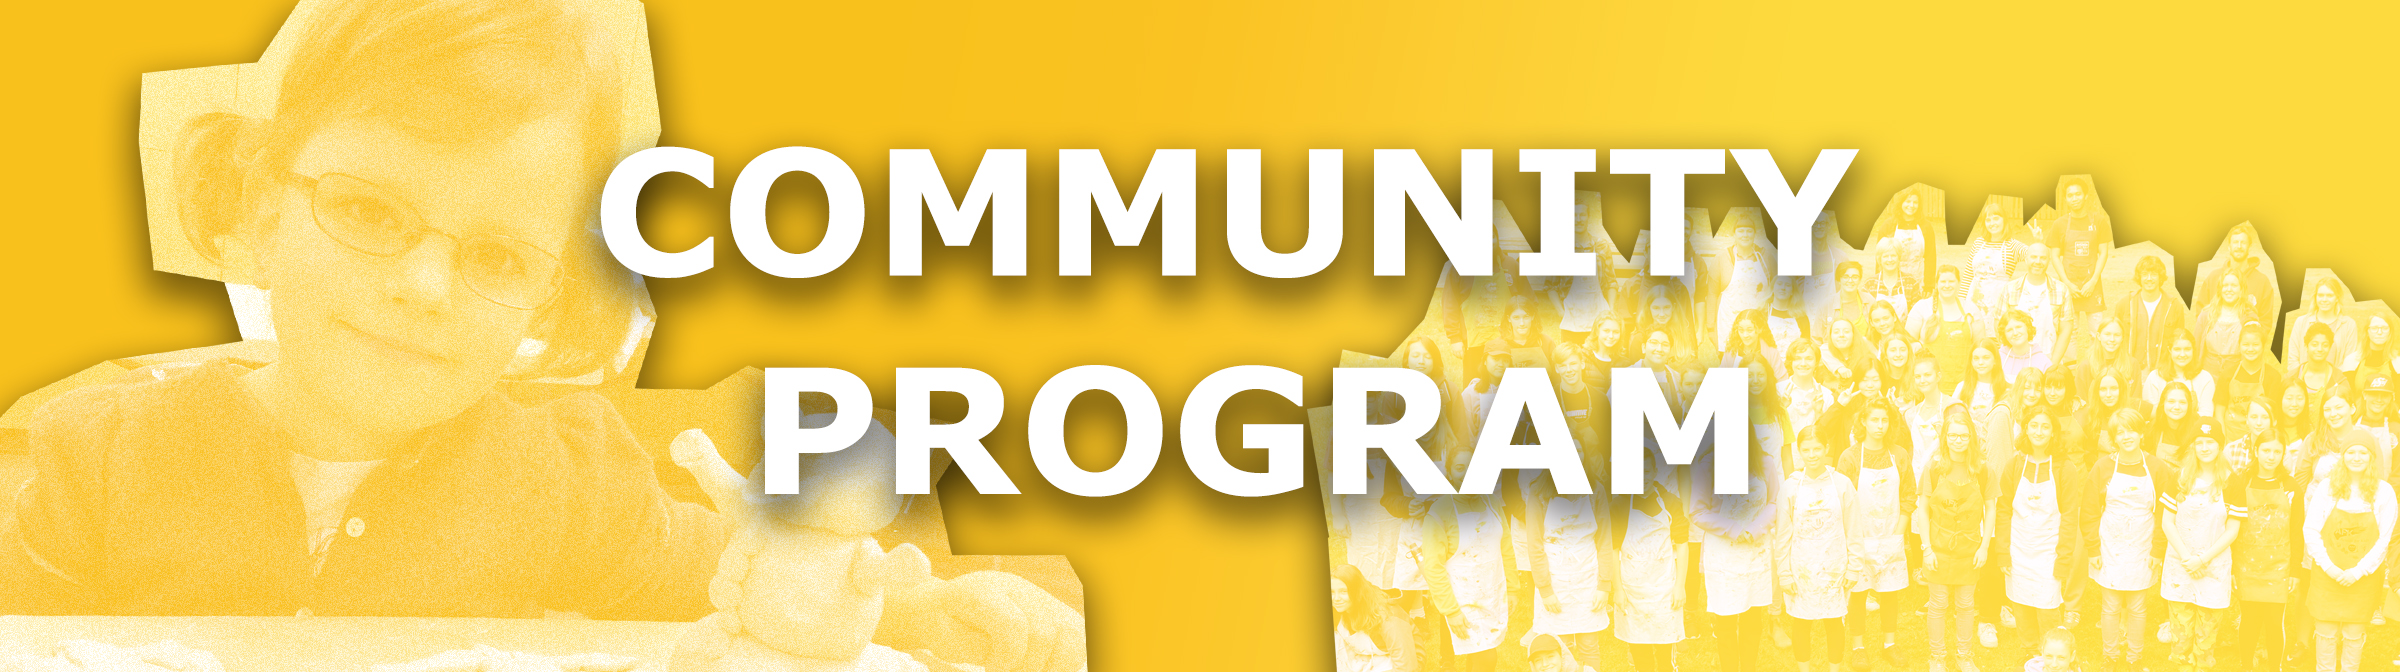 community program.jpg